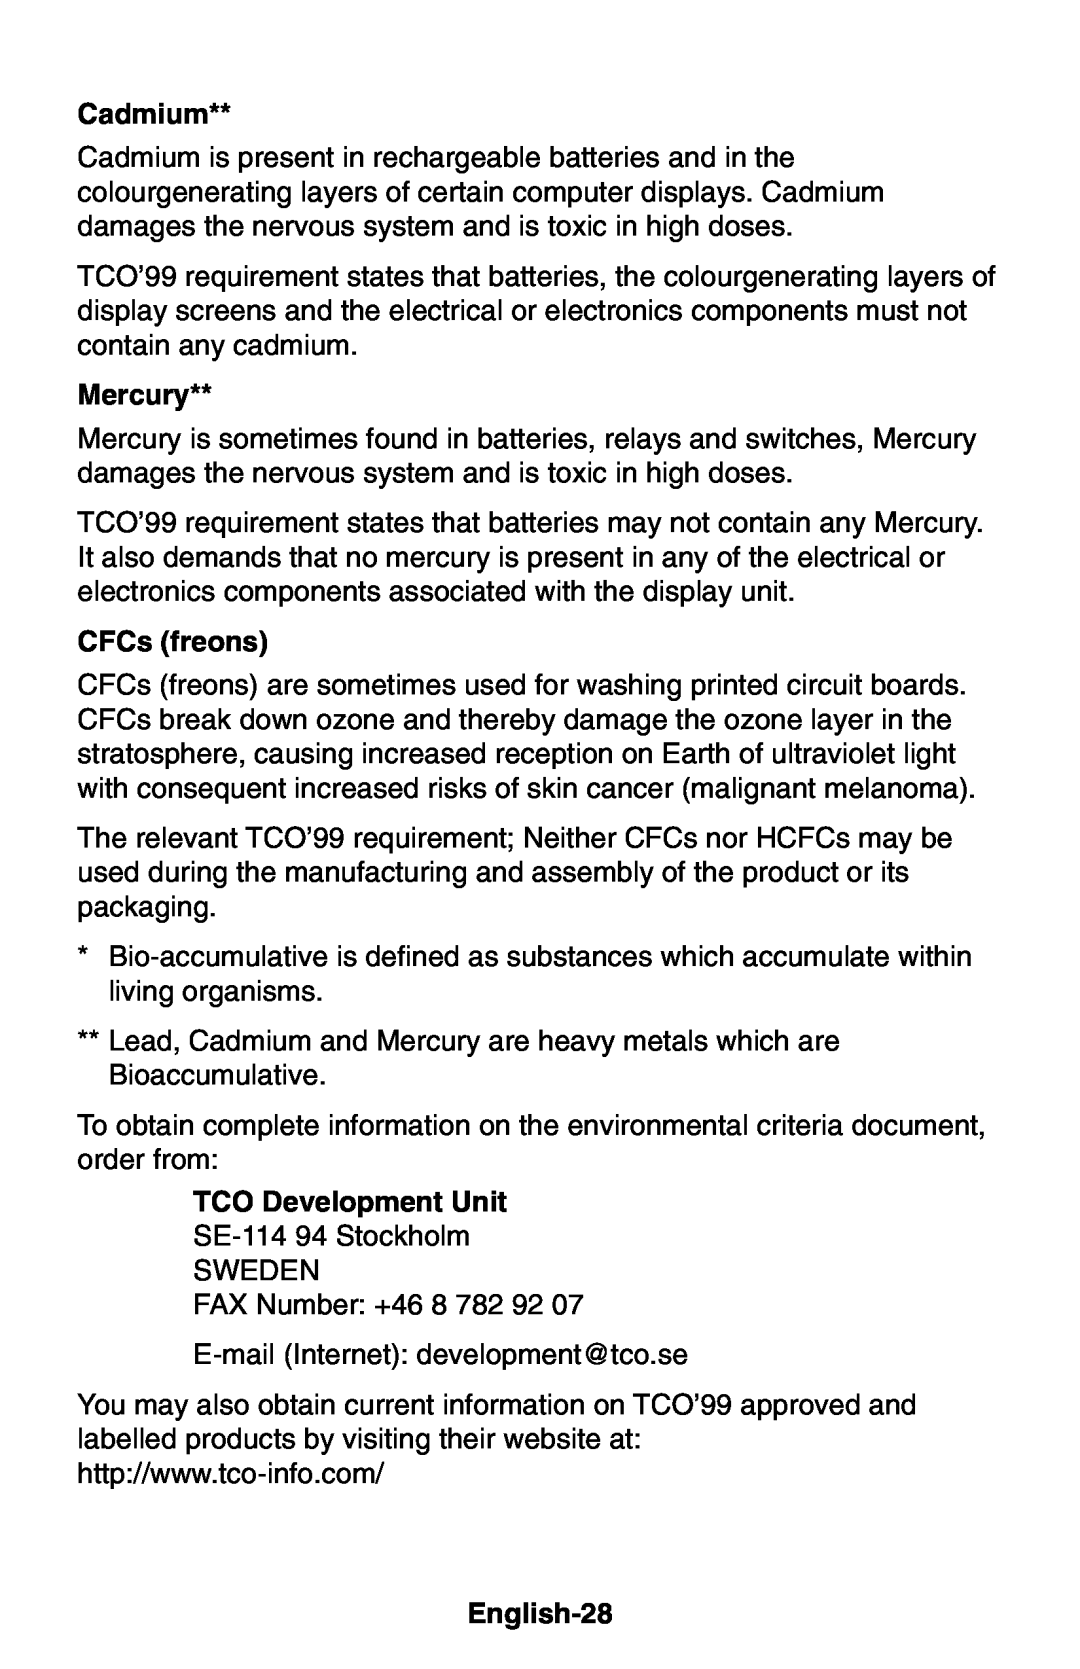 NEC LCD1850E user manual Cadmium, Mercury, CFCs freons, TCO Development Unit, English-28 